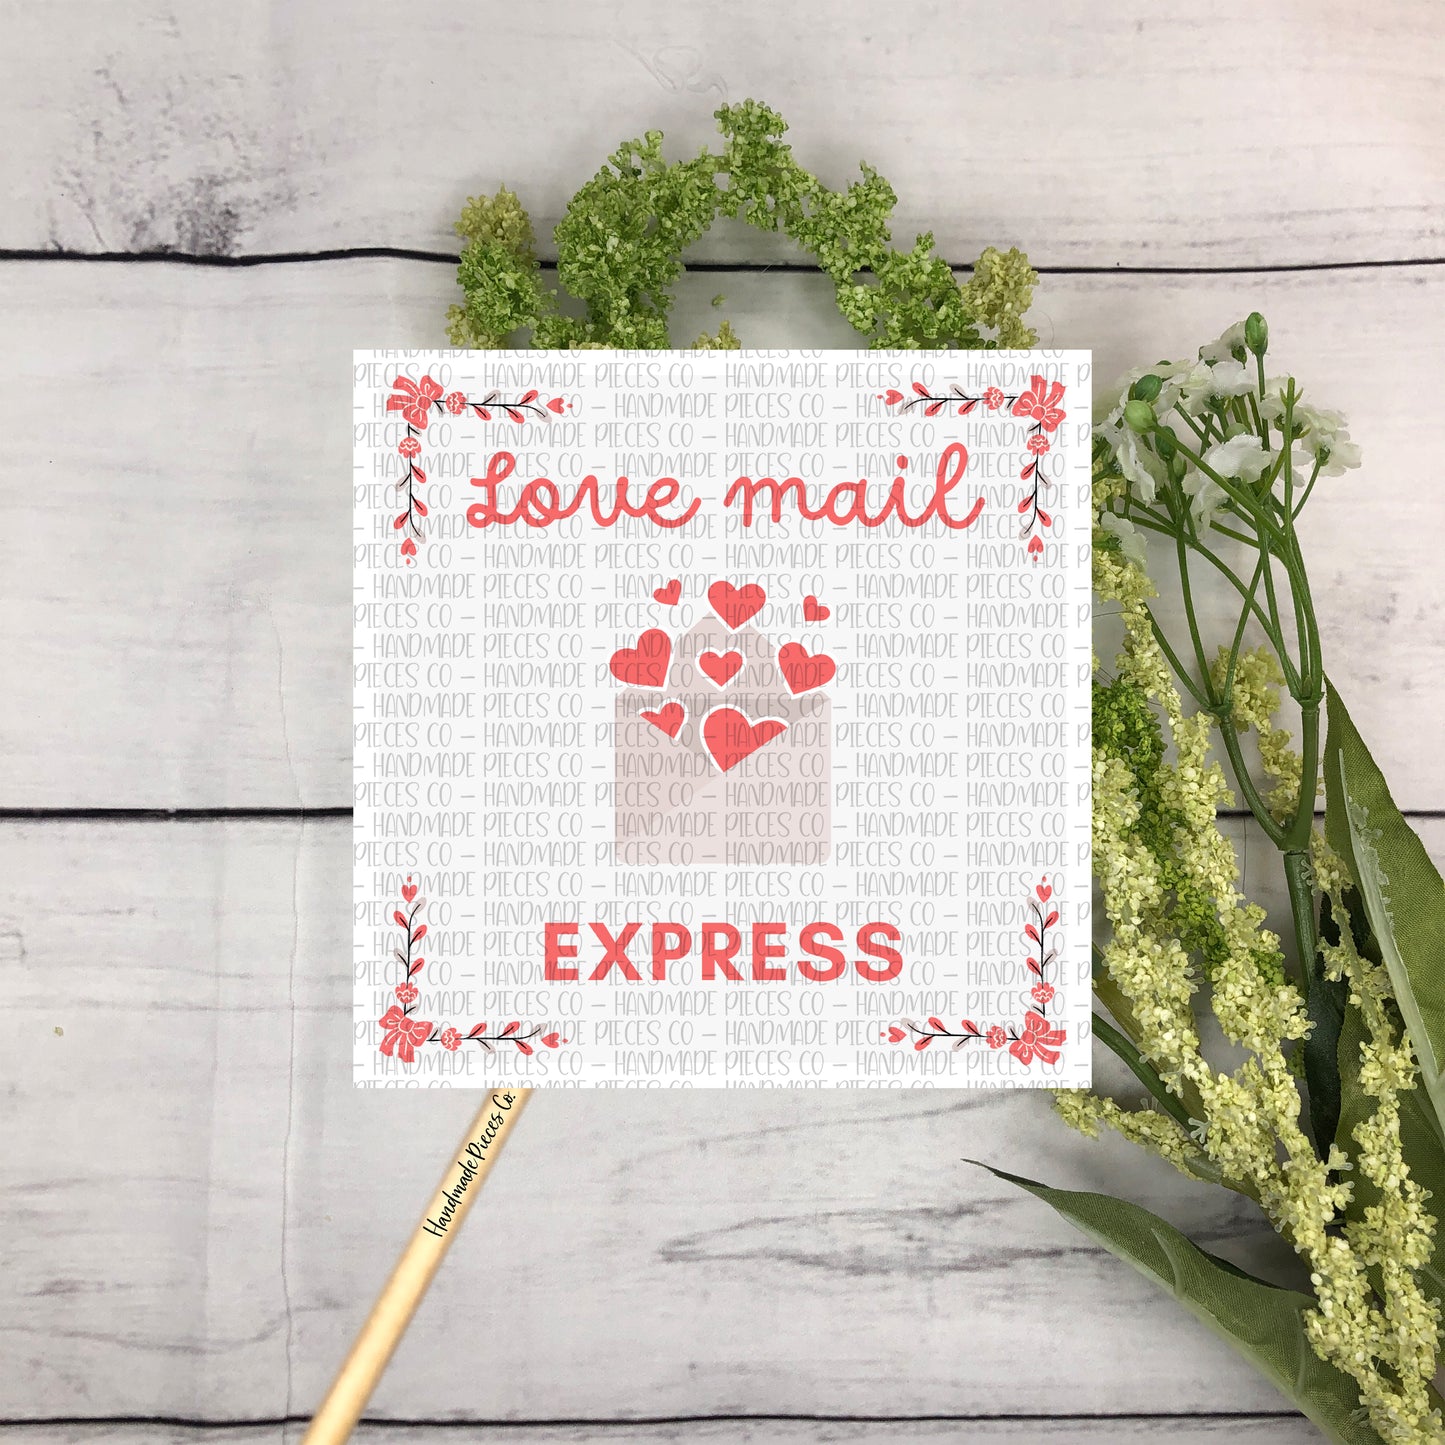 Love Mail Express Packaging Sticker - Valentine's Day Theme